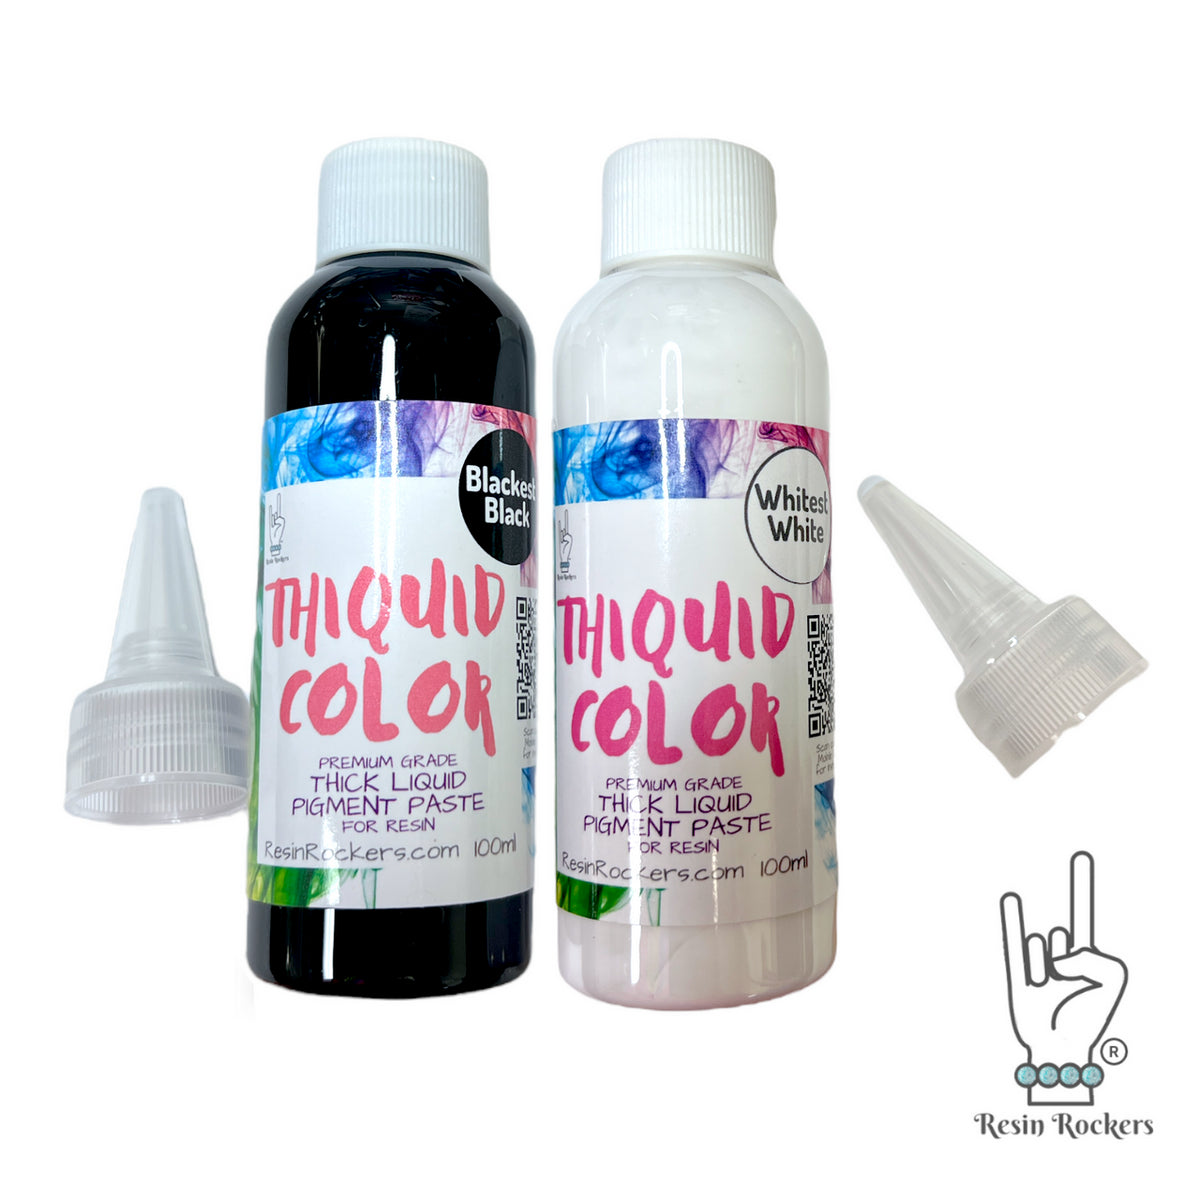 White Opaque Liquid Pigment Pigments The Epoxy Resin Store